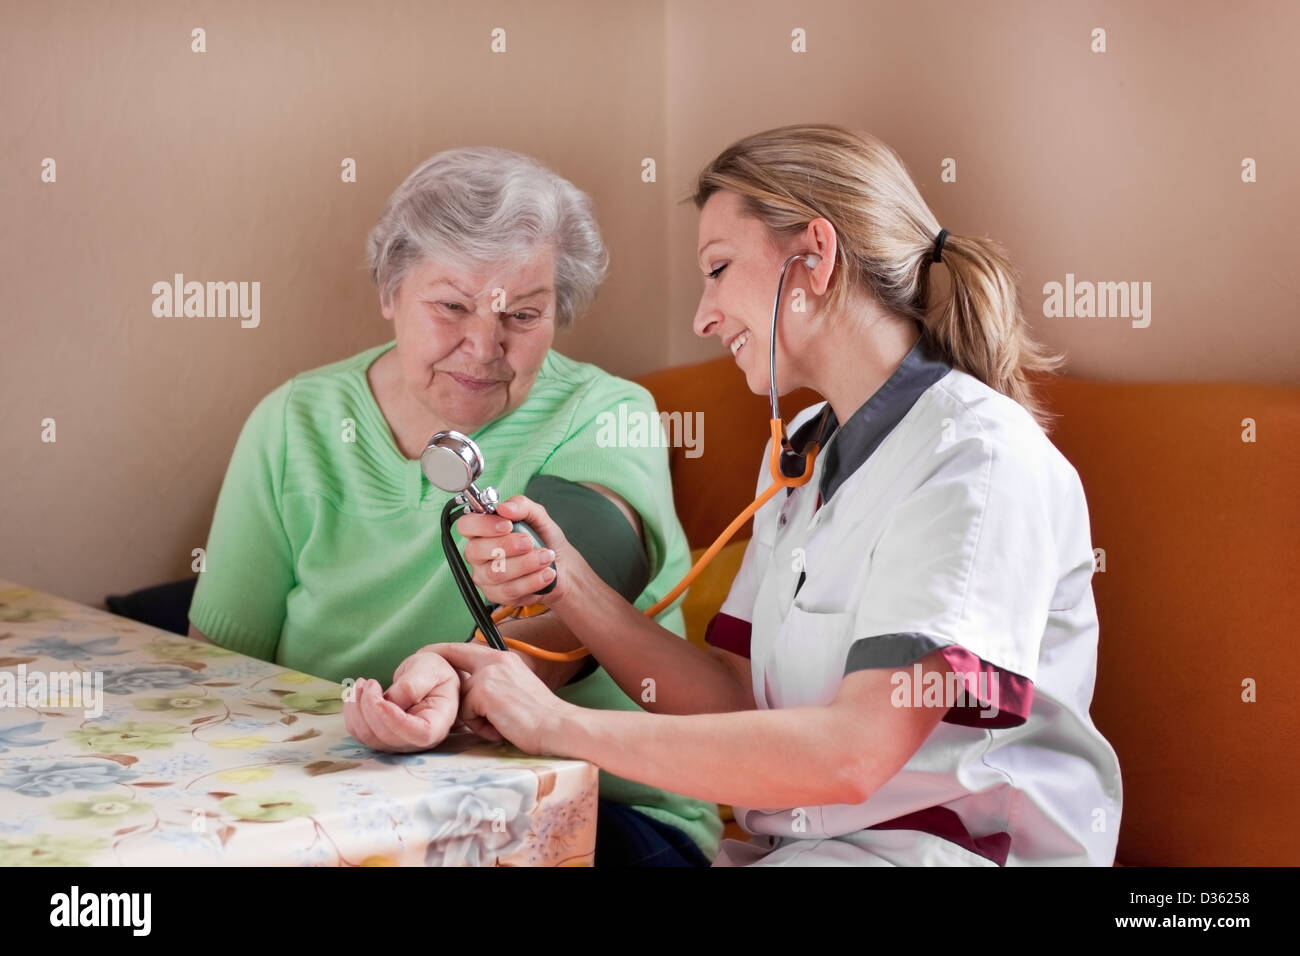 nurse measures the blood pressure of a patient Stock Photo